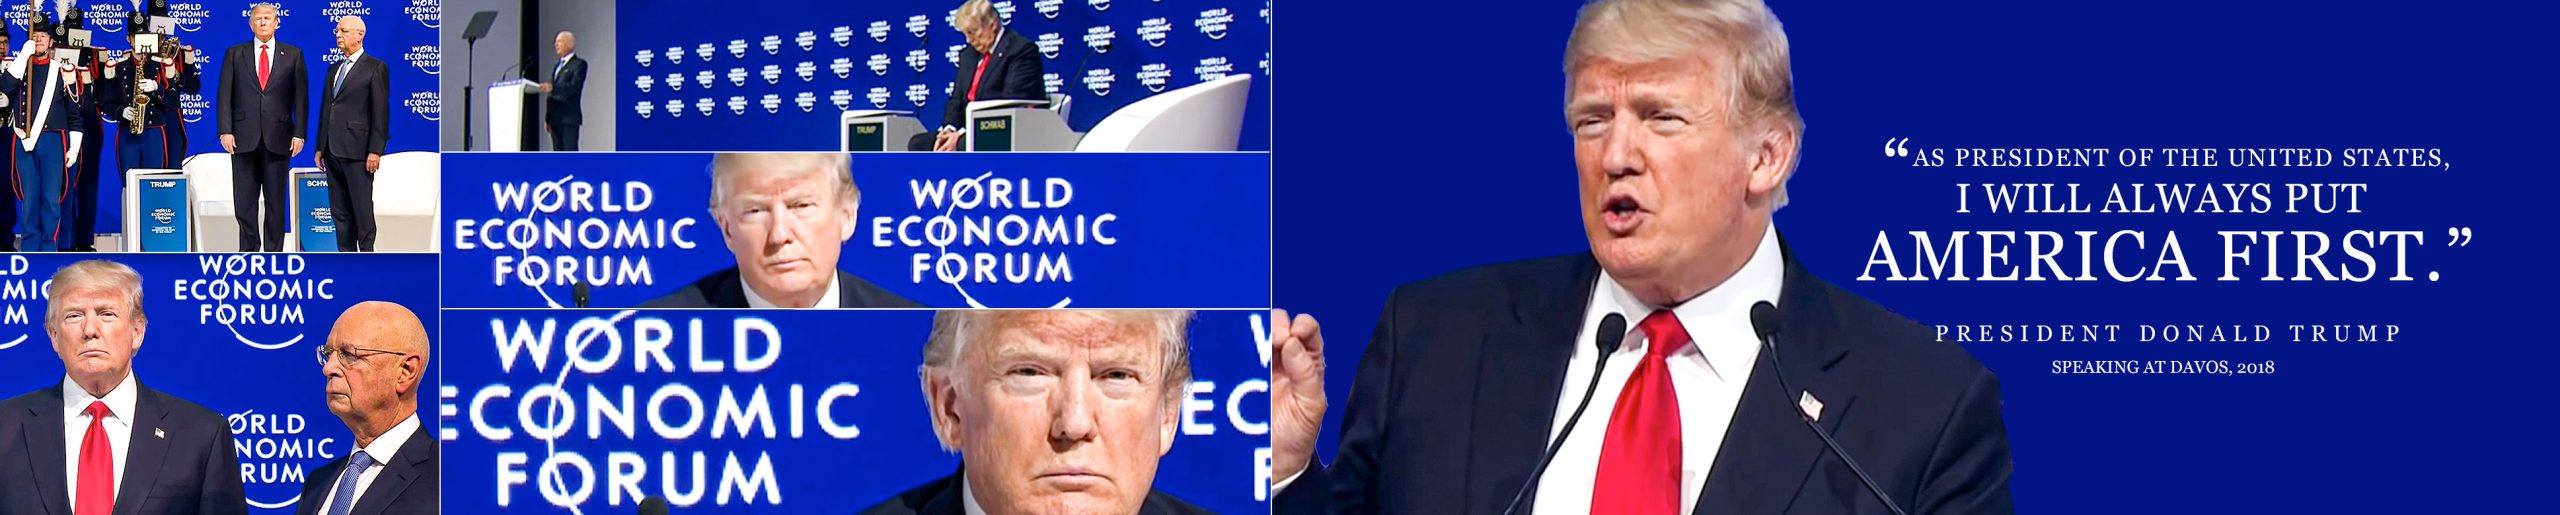 Trump Davos Mobile 2018